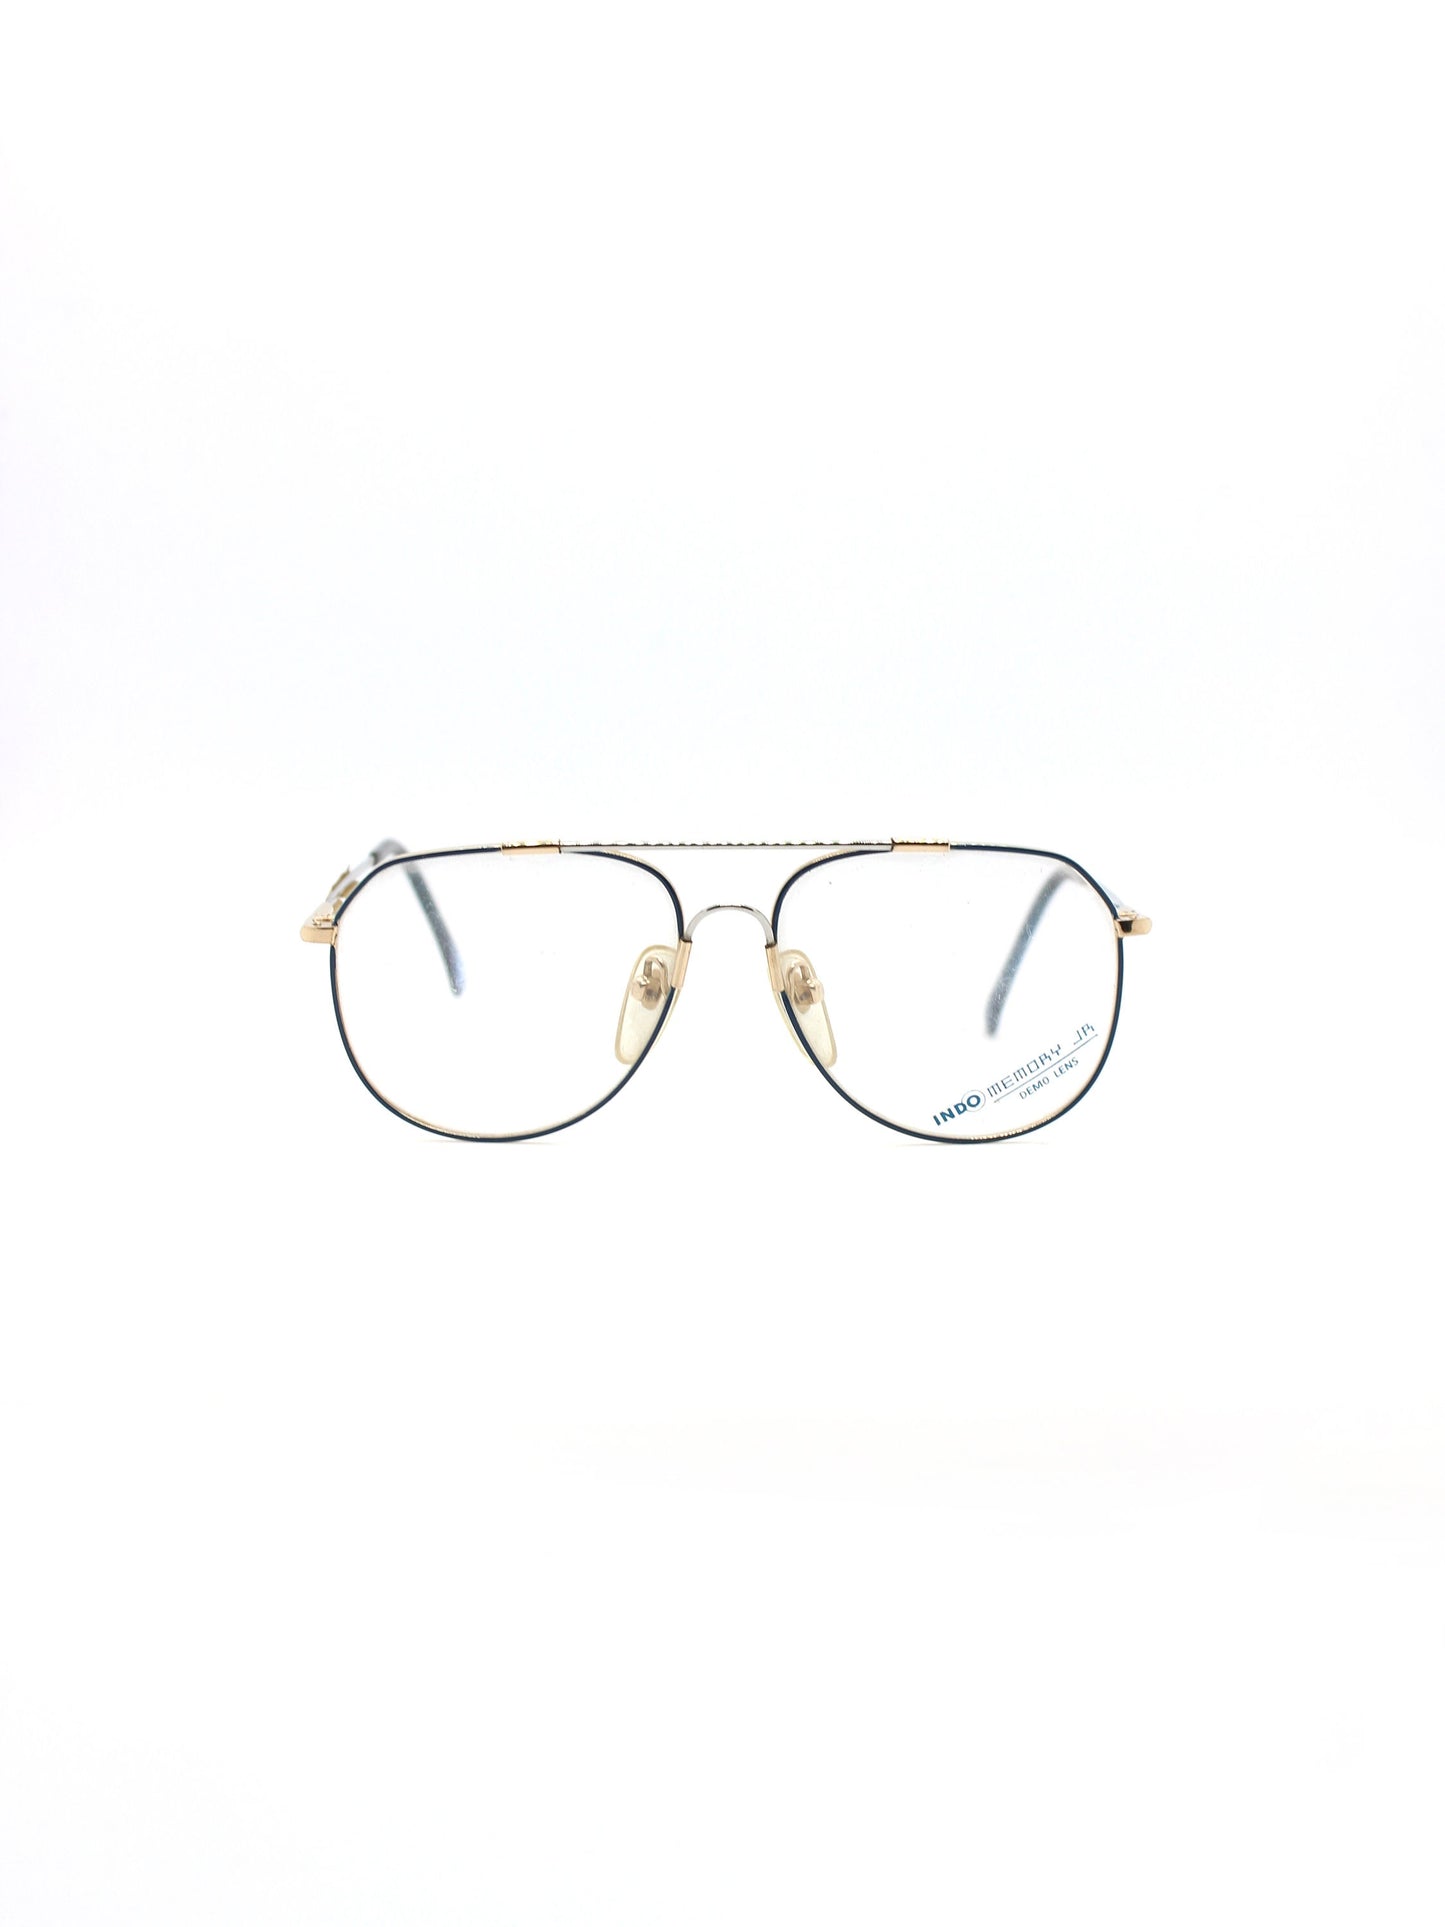 INDO Vintage New old stock Aviator eyeglasses frames. Mod. Memory Jr. Spain